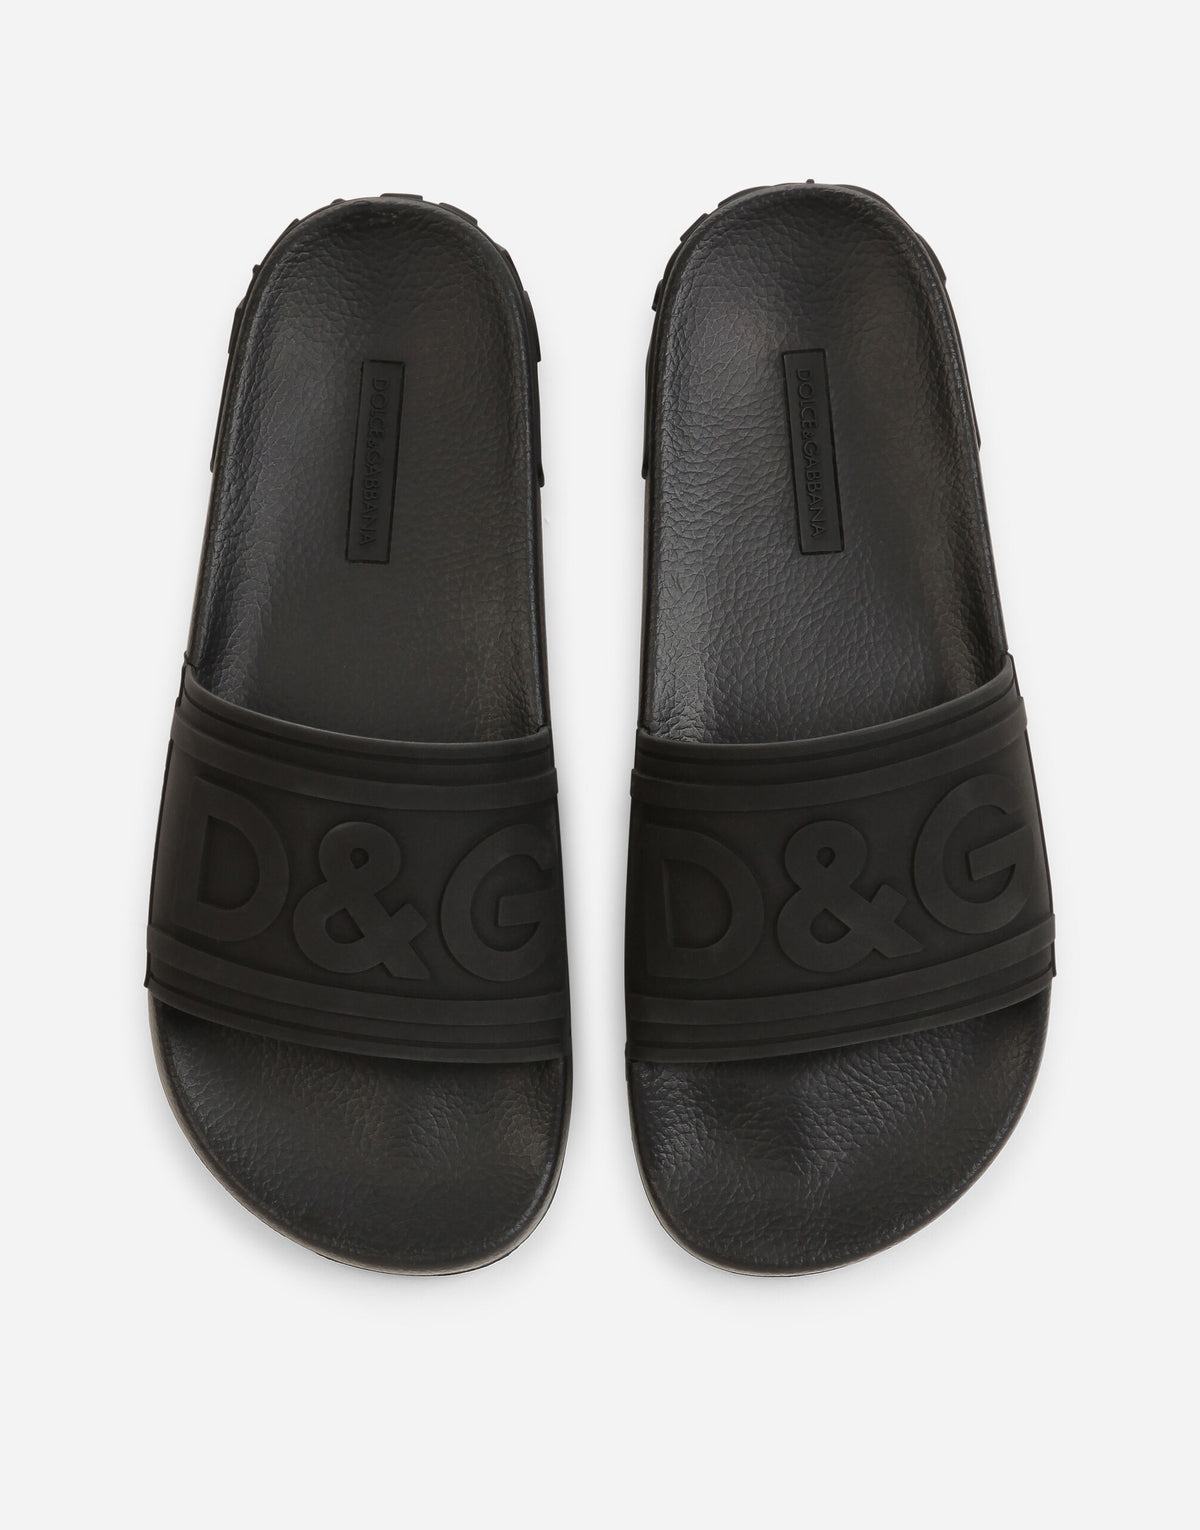 Dolce & Gabbana Black Rubber Beachwear Slides